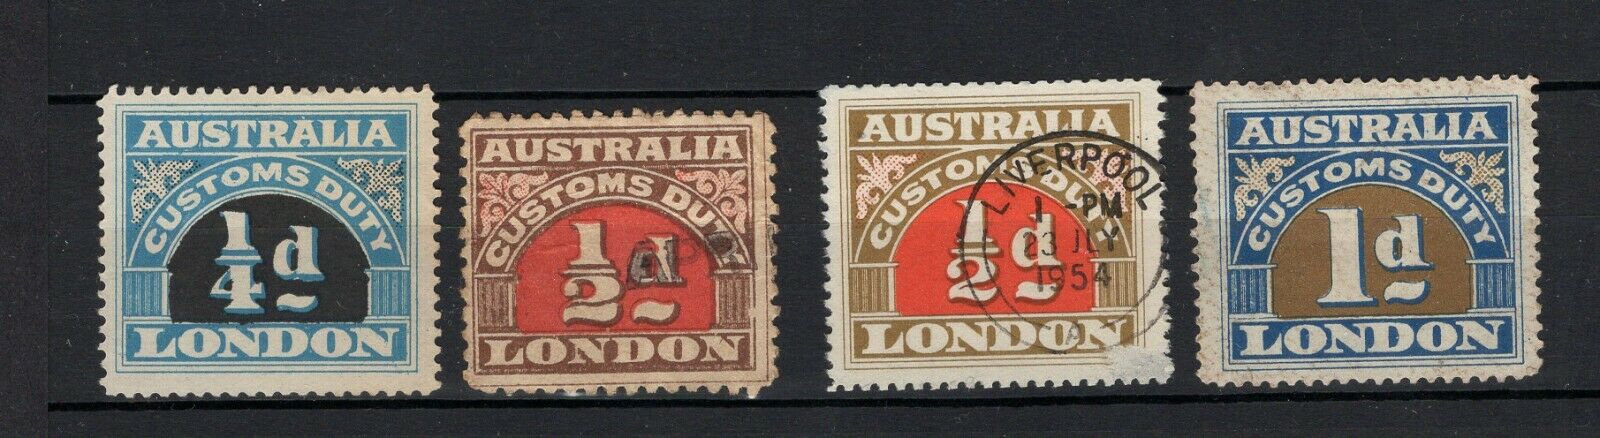 Australia Custom Duty Stamps Used/ Mng Revenue